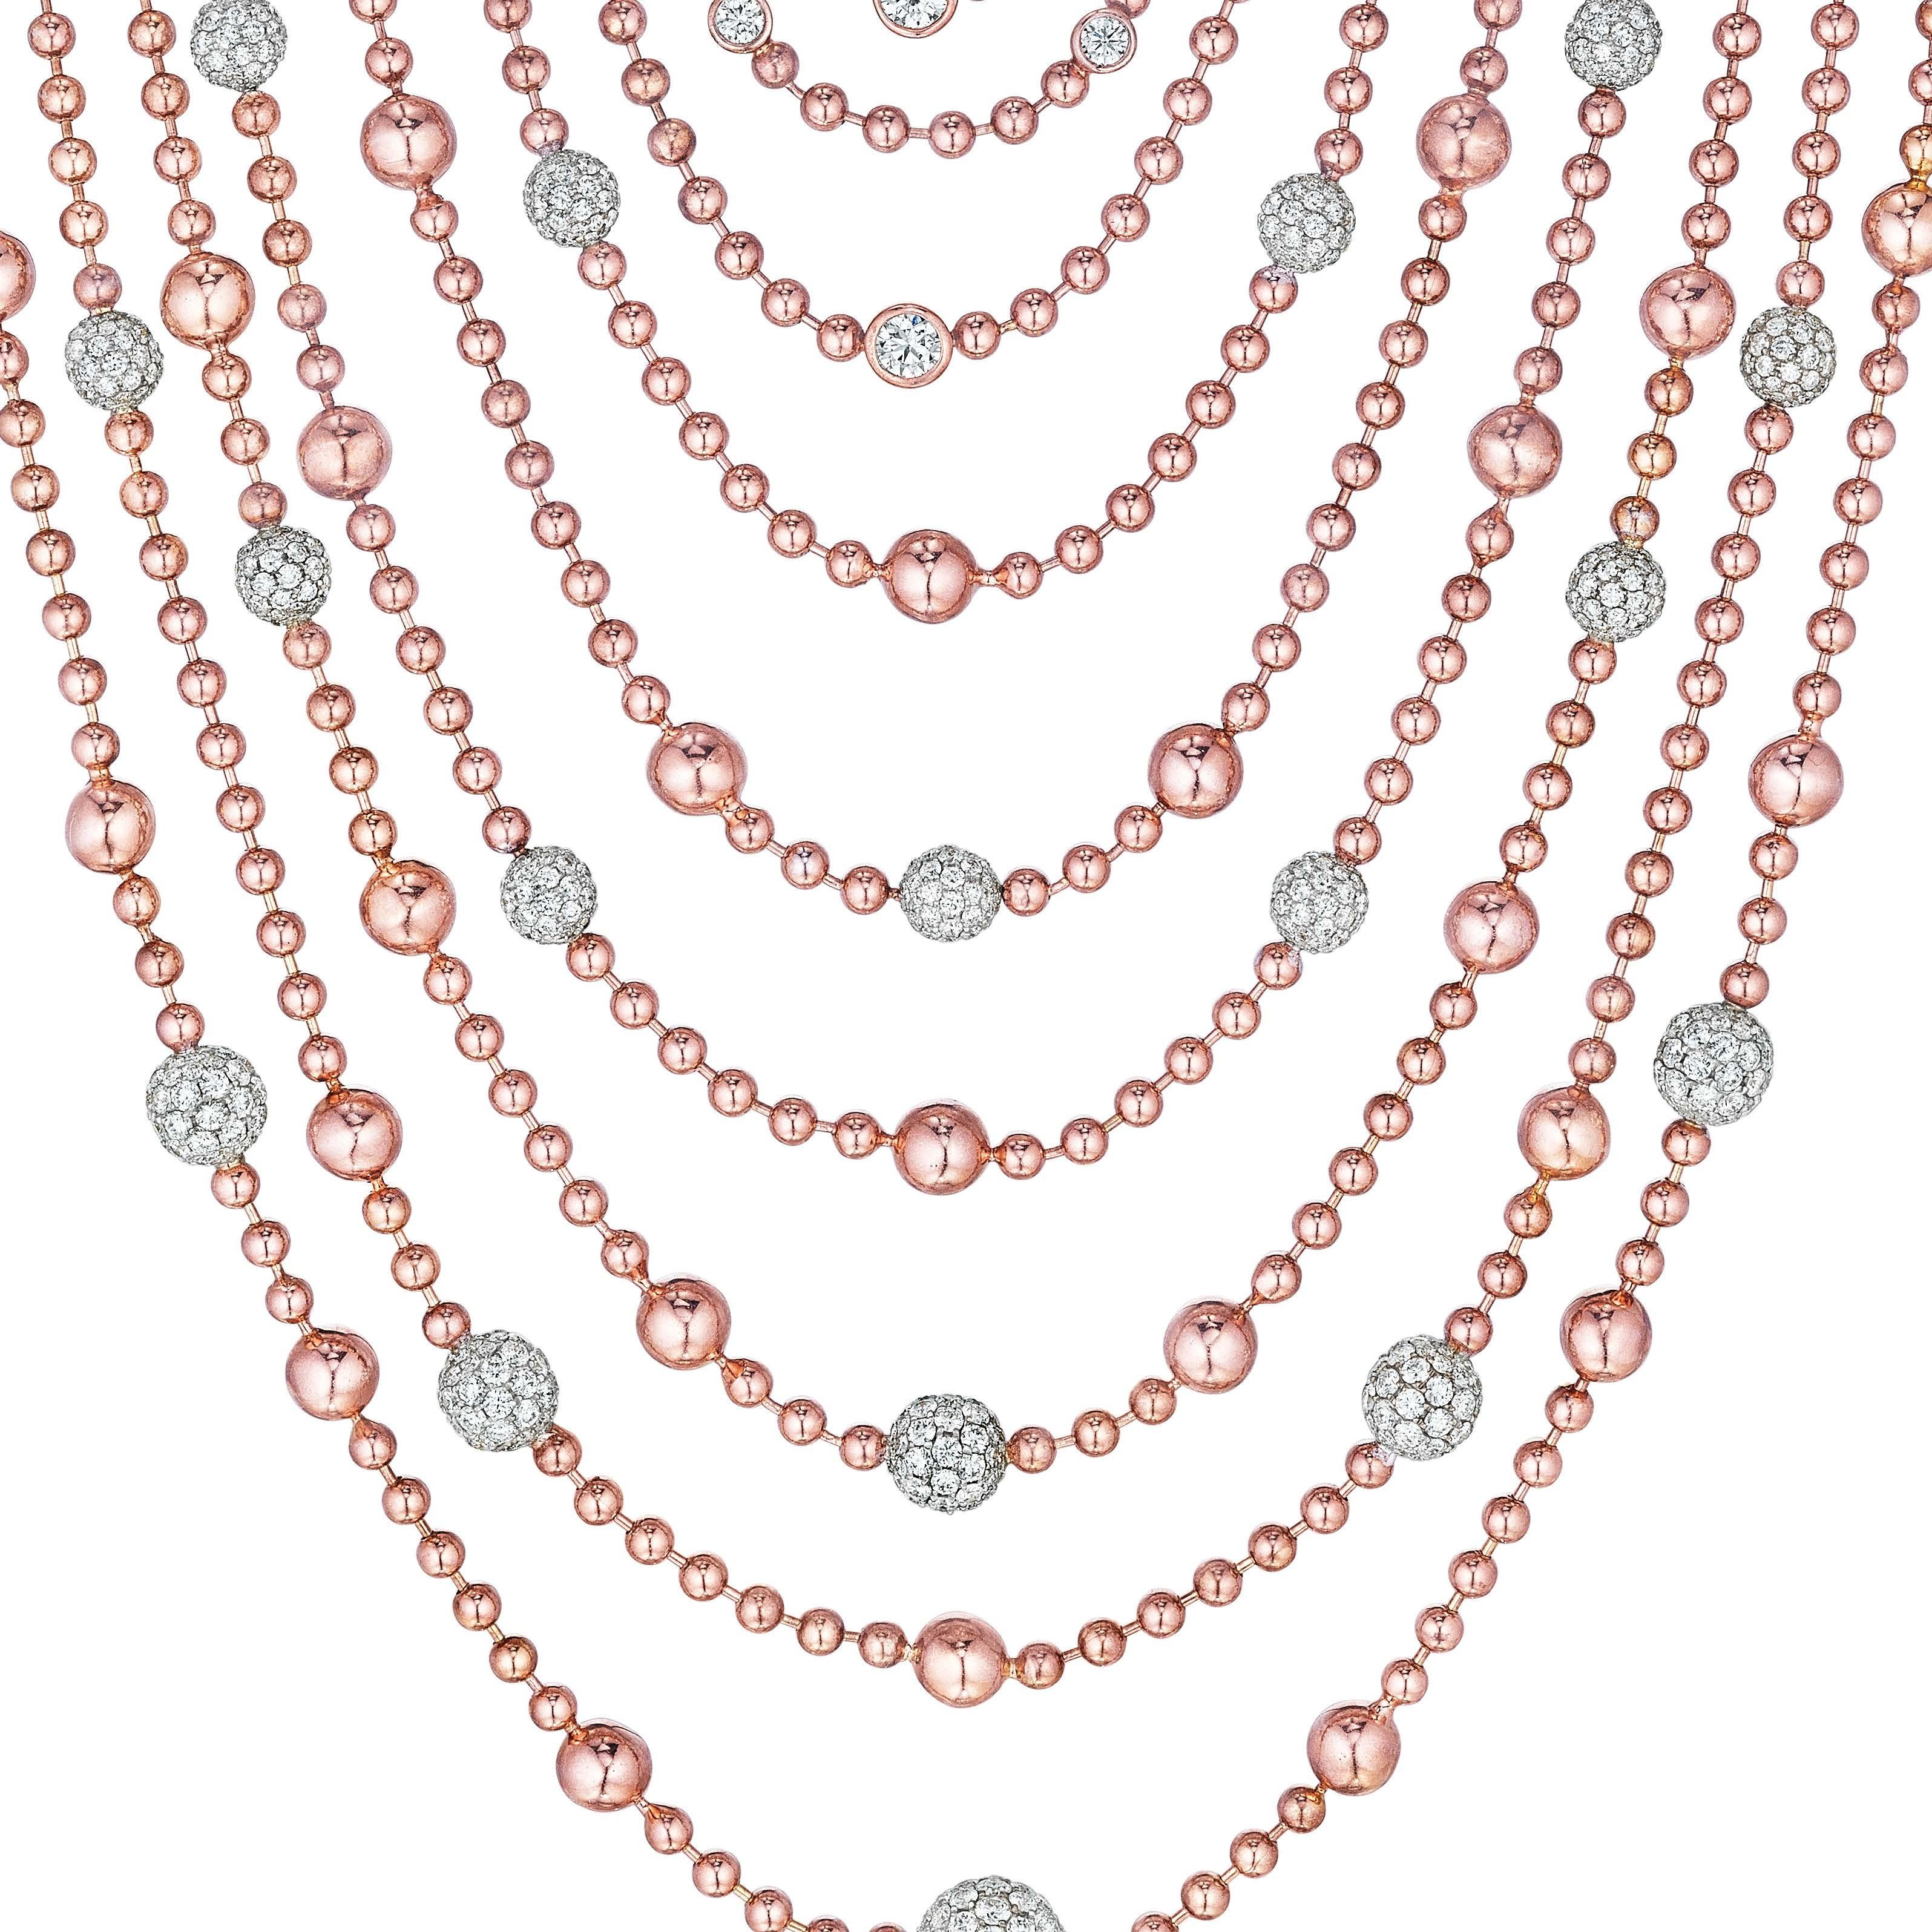 Women's or Men's Multilayer Flapper Bib Necklace 7.48 Carat Diamond Necklace in 18 Karat Gold For Sale